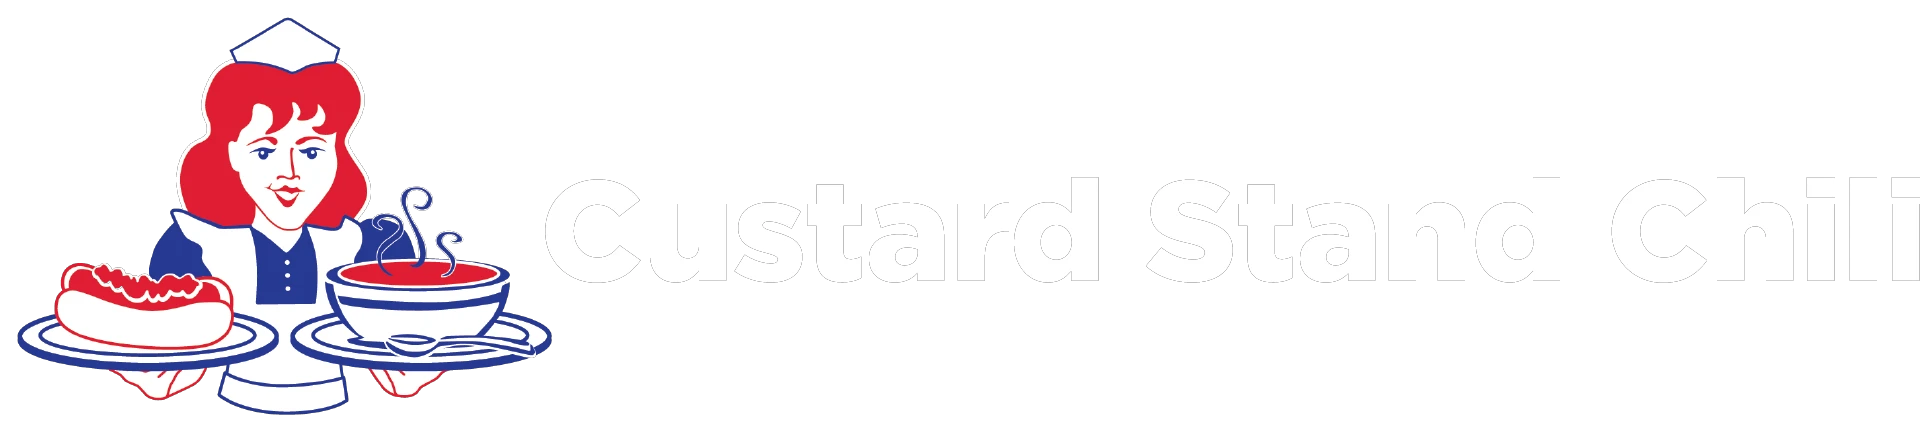 Custardstand.com promo codes 